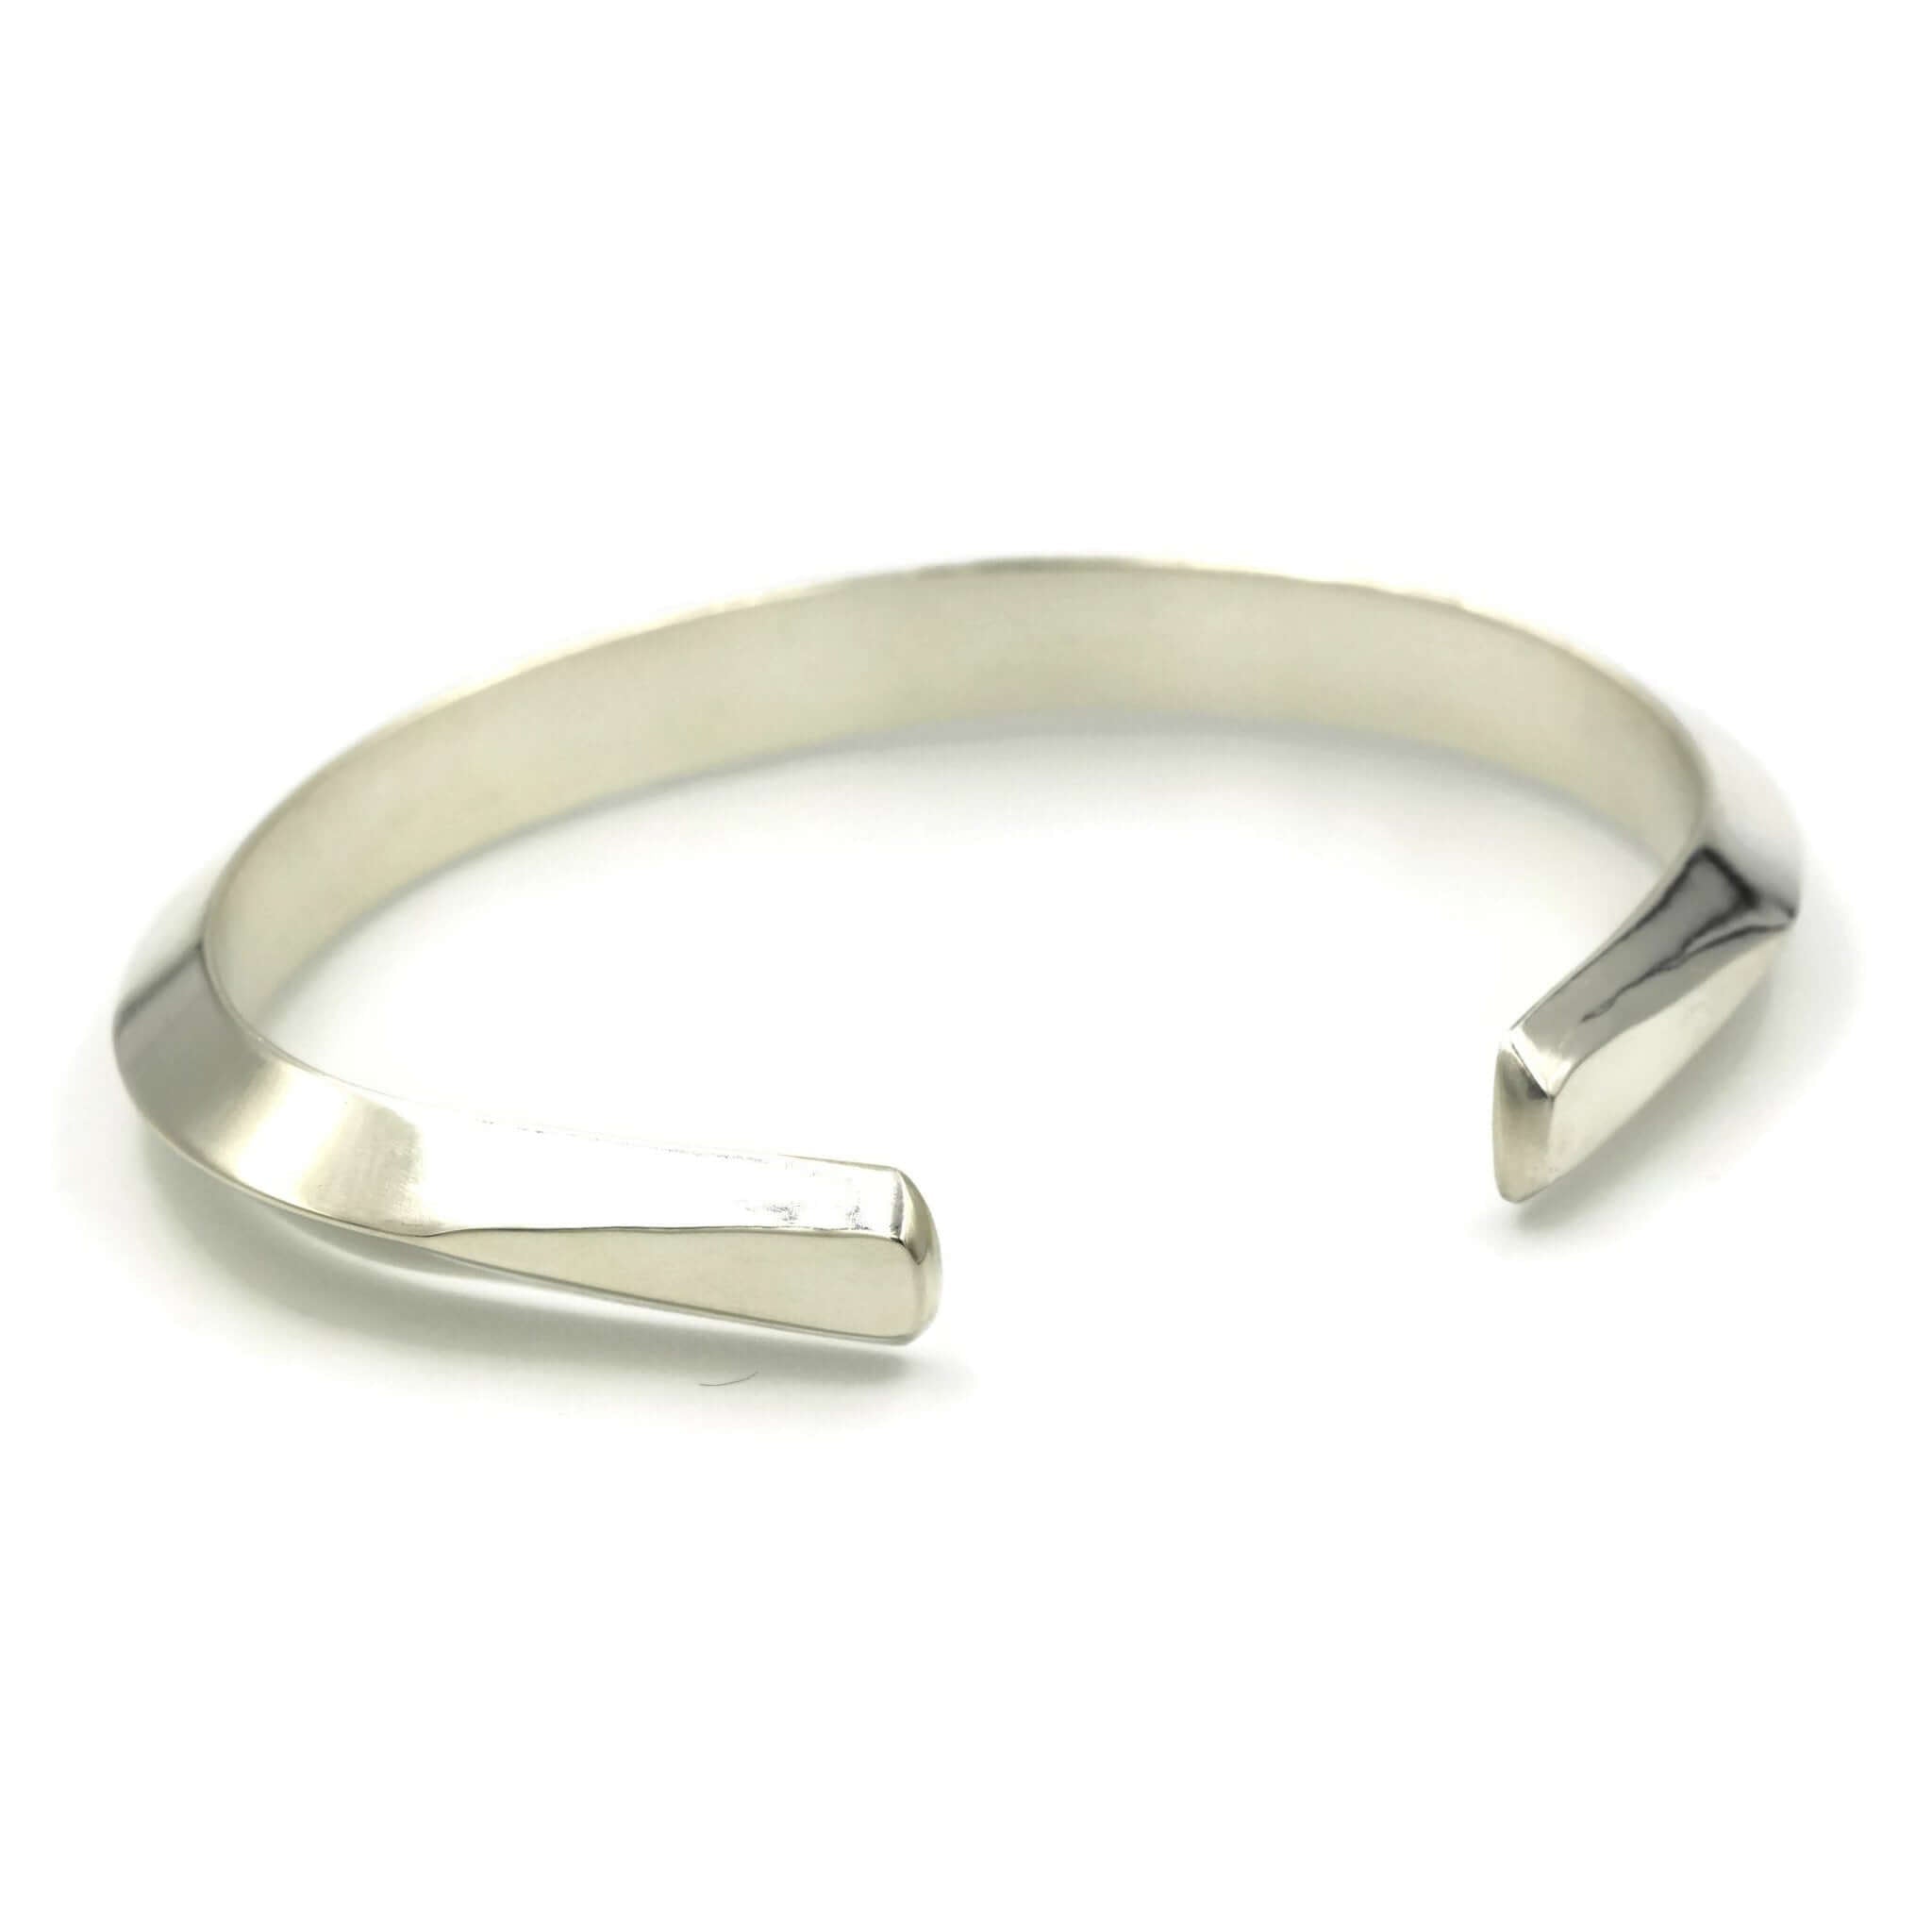 Handmade Concave Silver Cuff Bracelet For Sale Australian Made